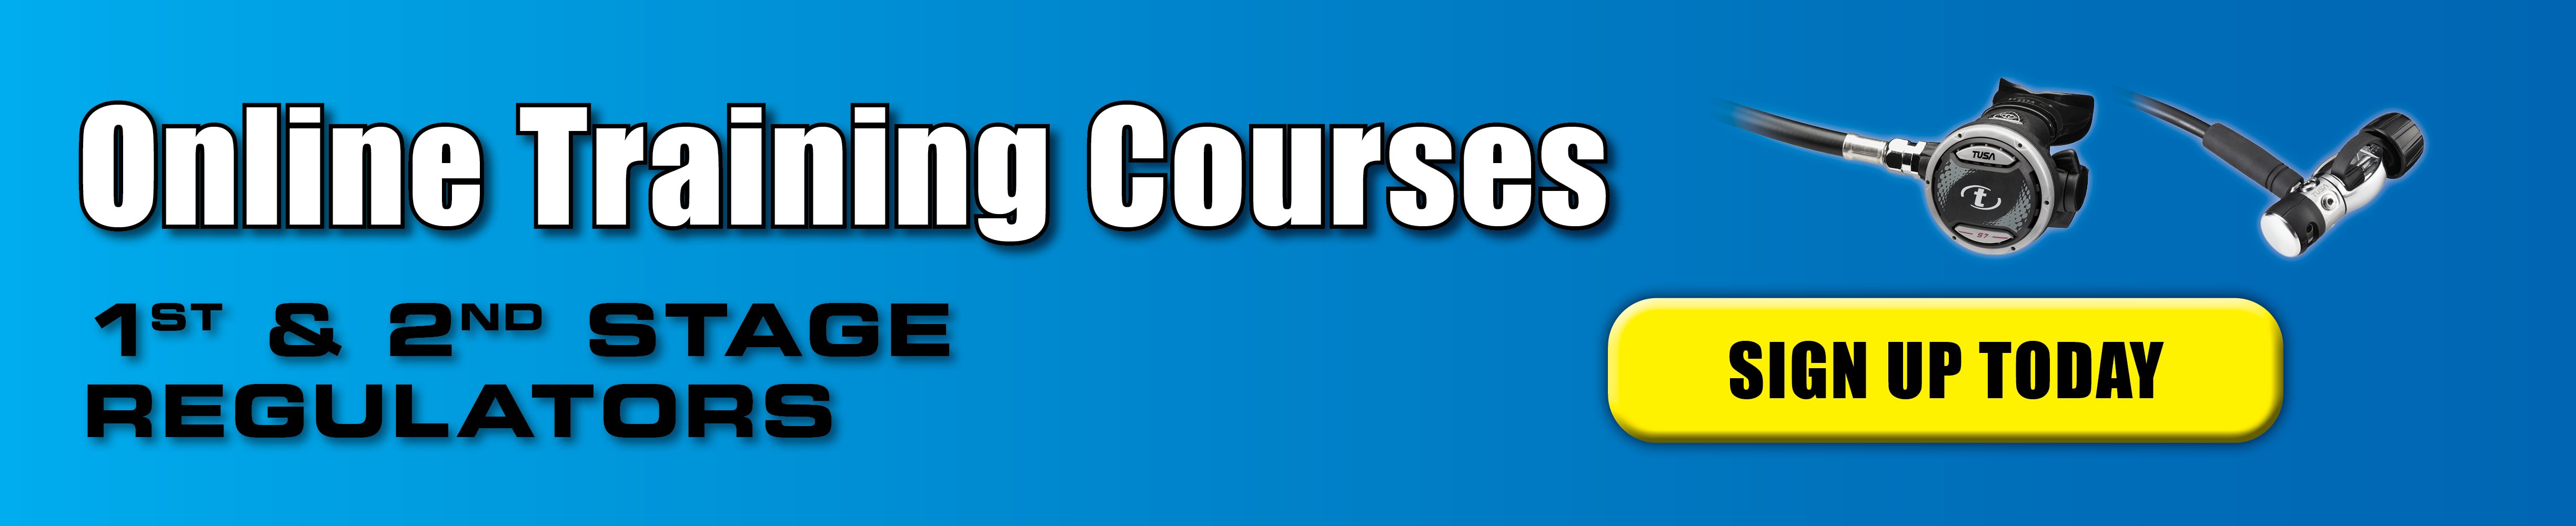 TUSA Online Training Courses